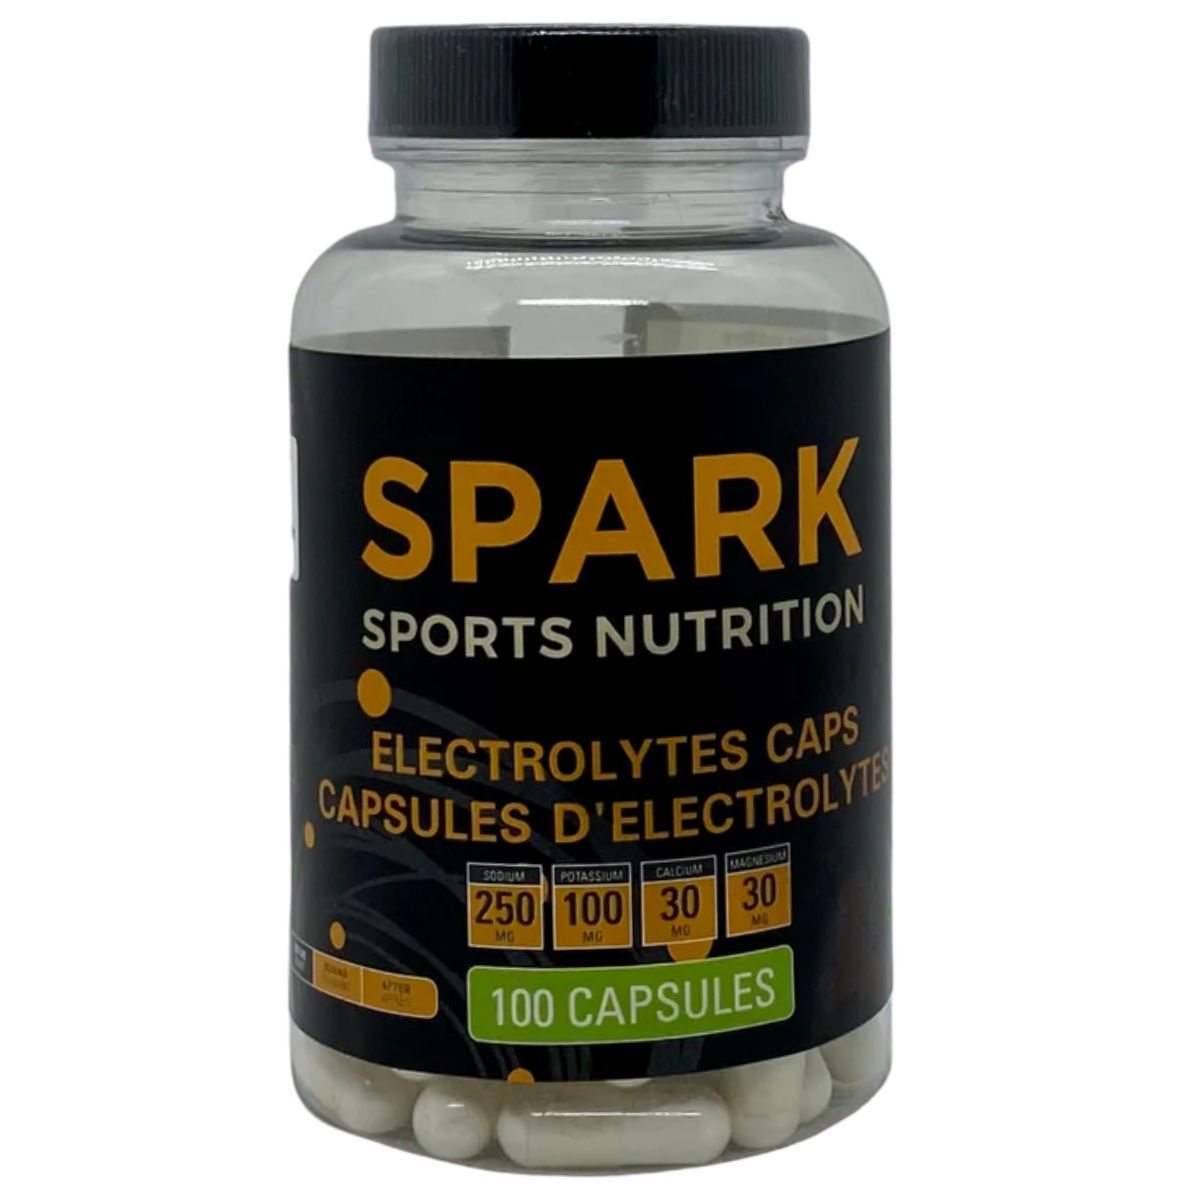 Spark capsules electrolytes